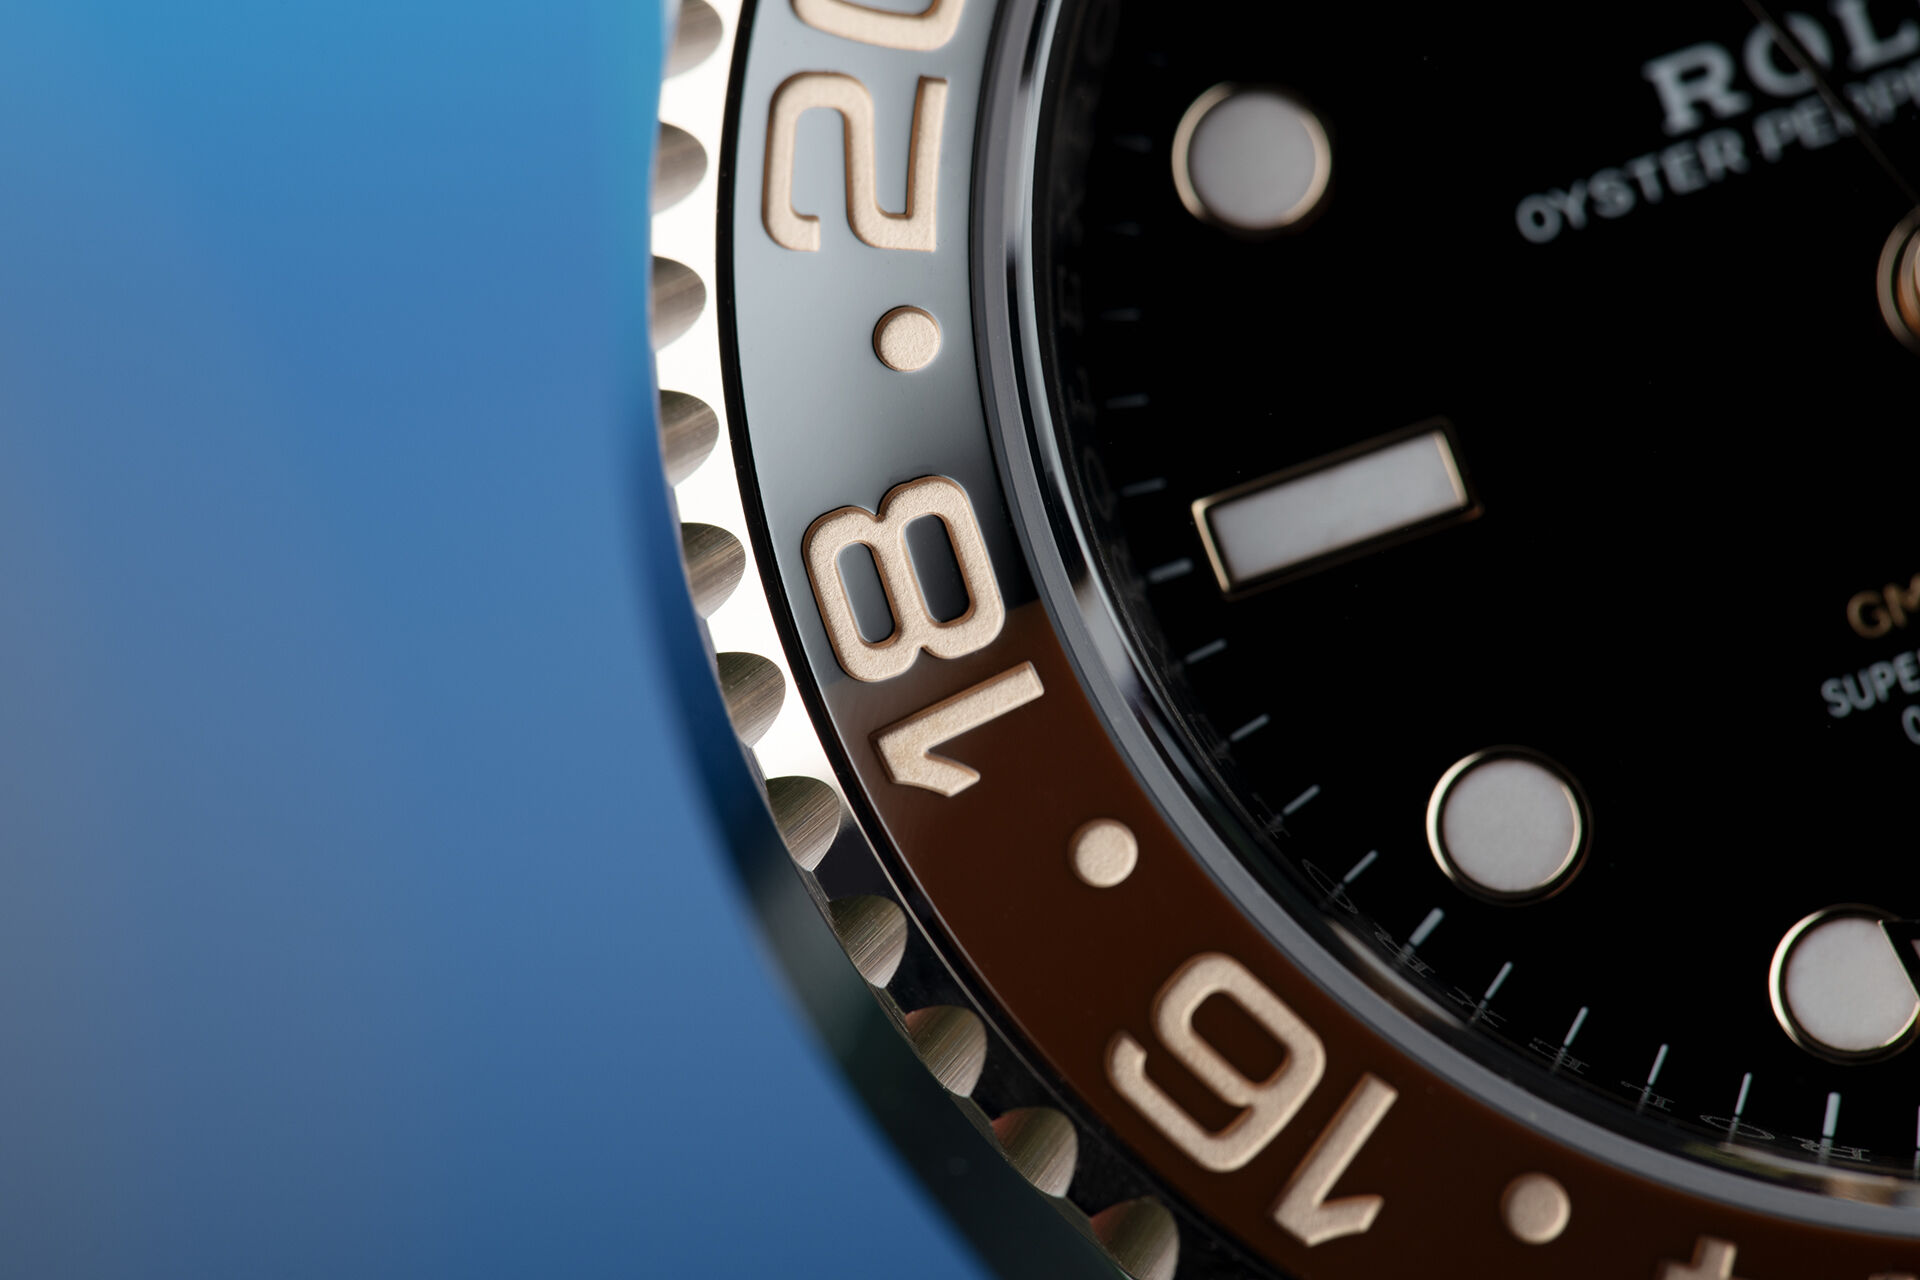 ref 126711CHNR | 'Brand New' | Rolex GMT-Master II